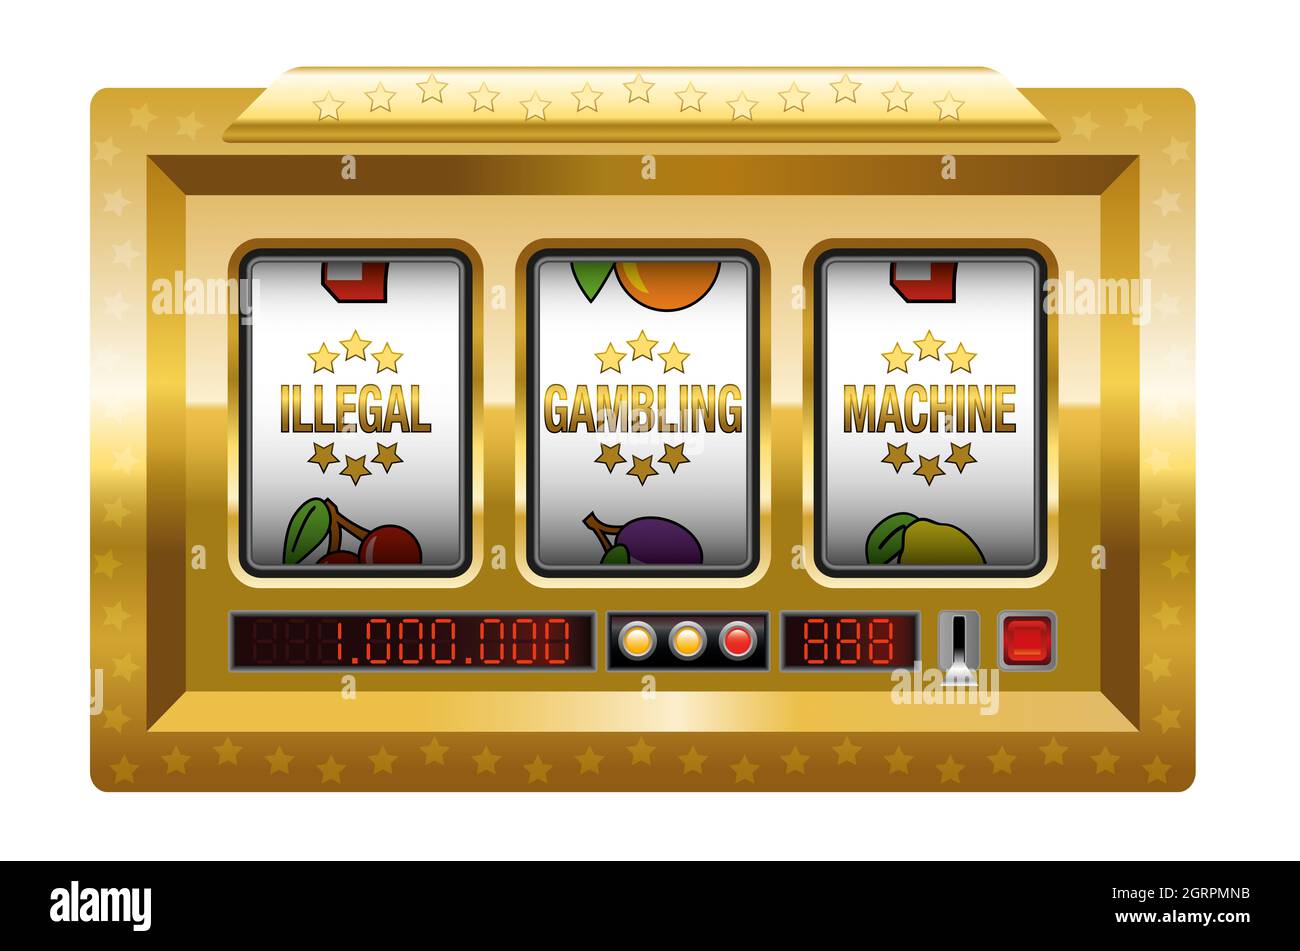 Illegal gambling machines - golden slot machine with three reels lettering ILLEGAL GAMBLING MACHINE - illustration on white background. Stock Photo